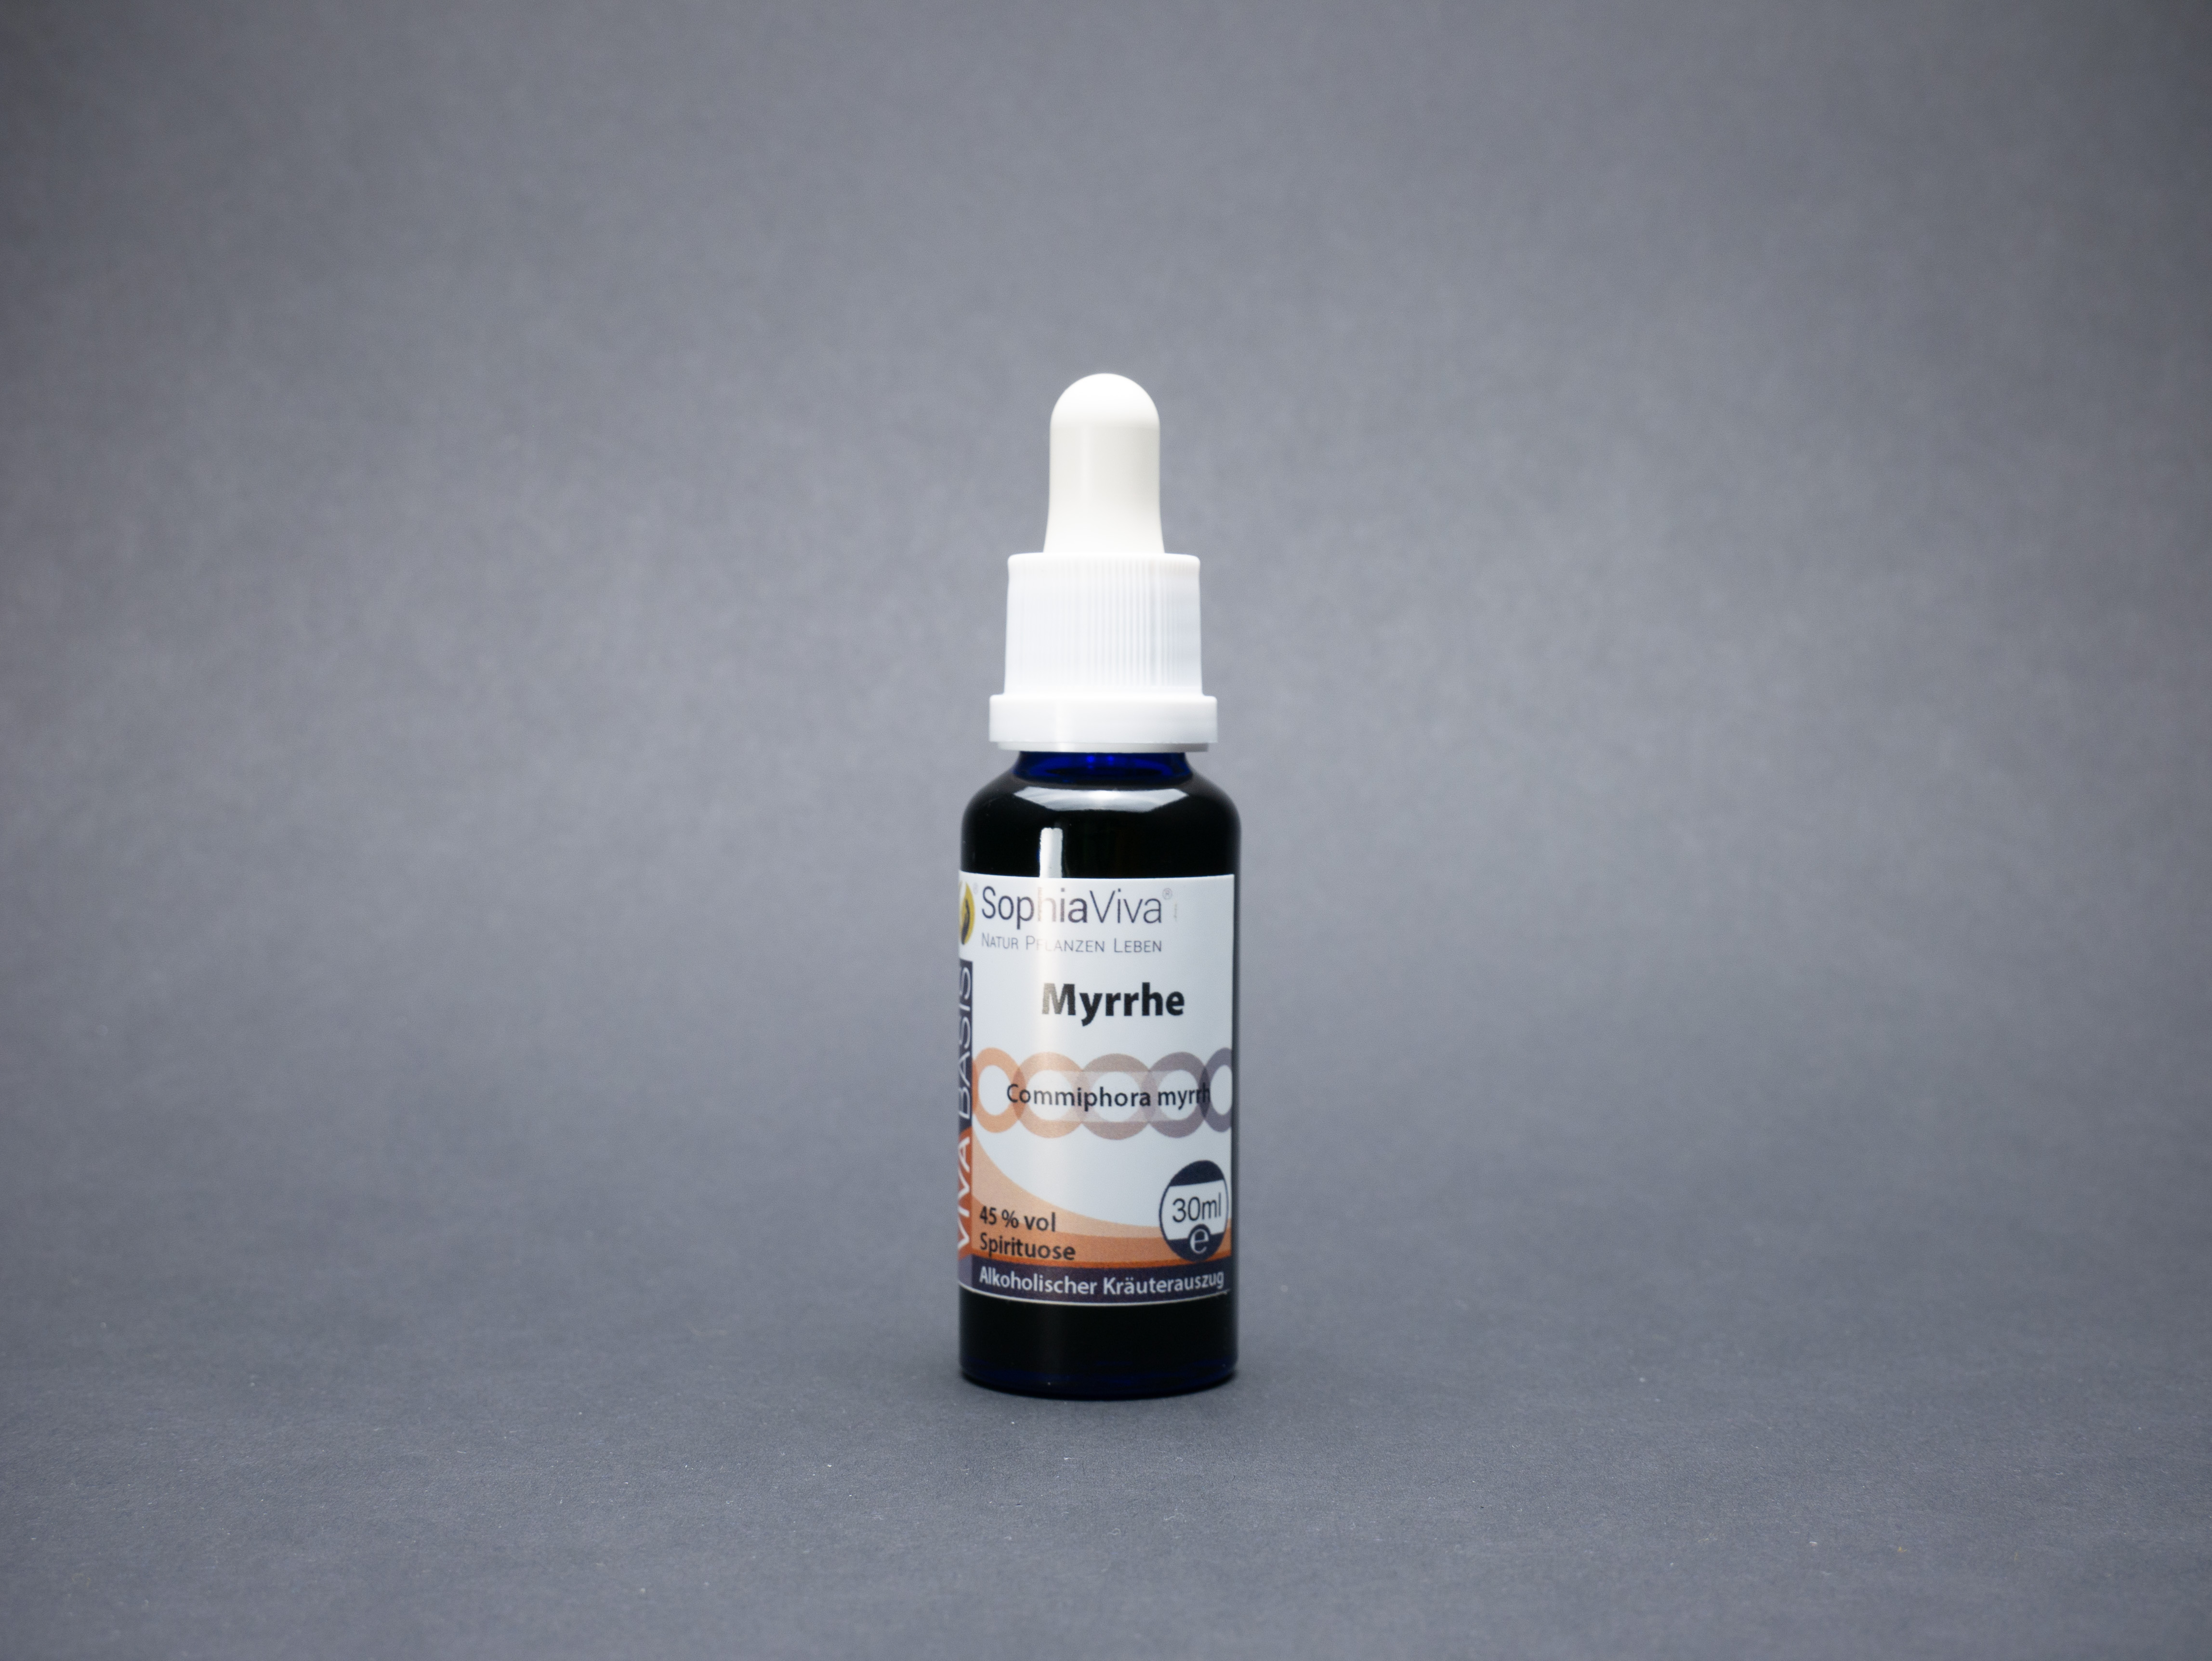 VivaBasis Myrrhe | Commiphora myrrha